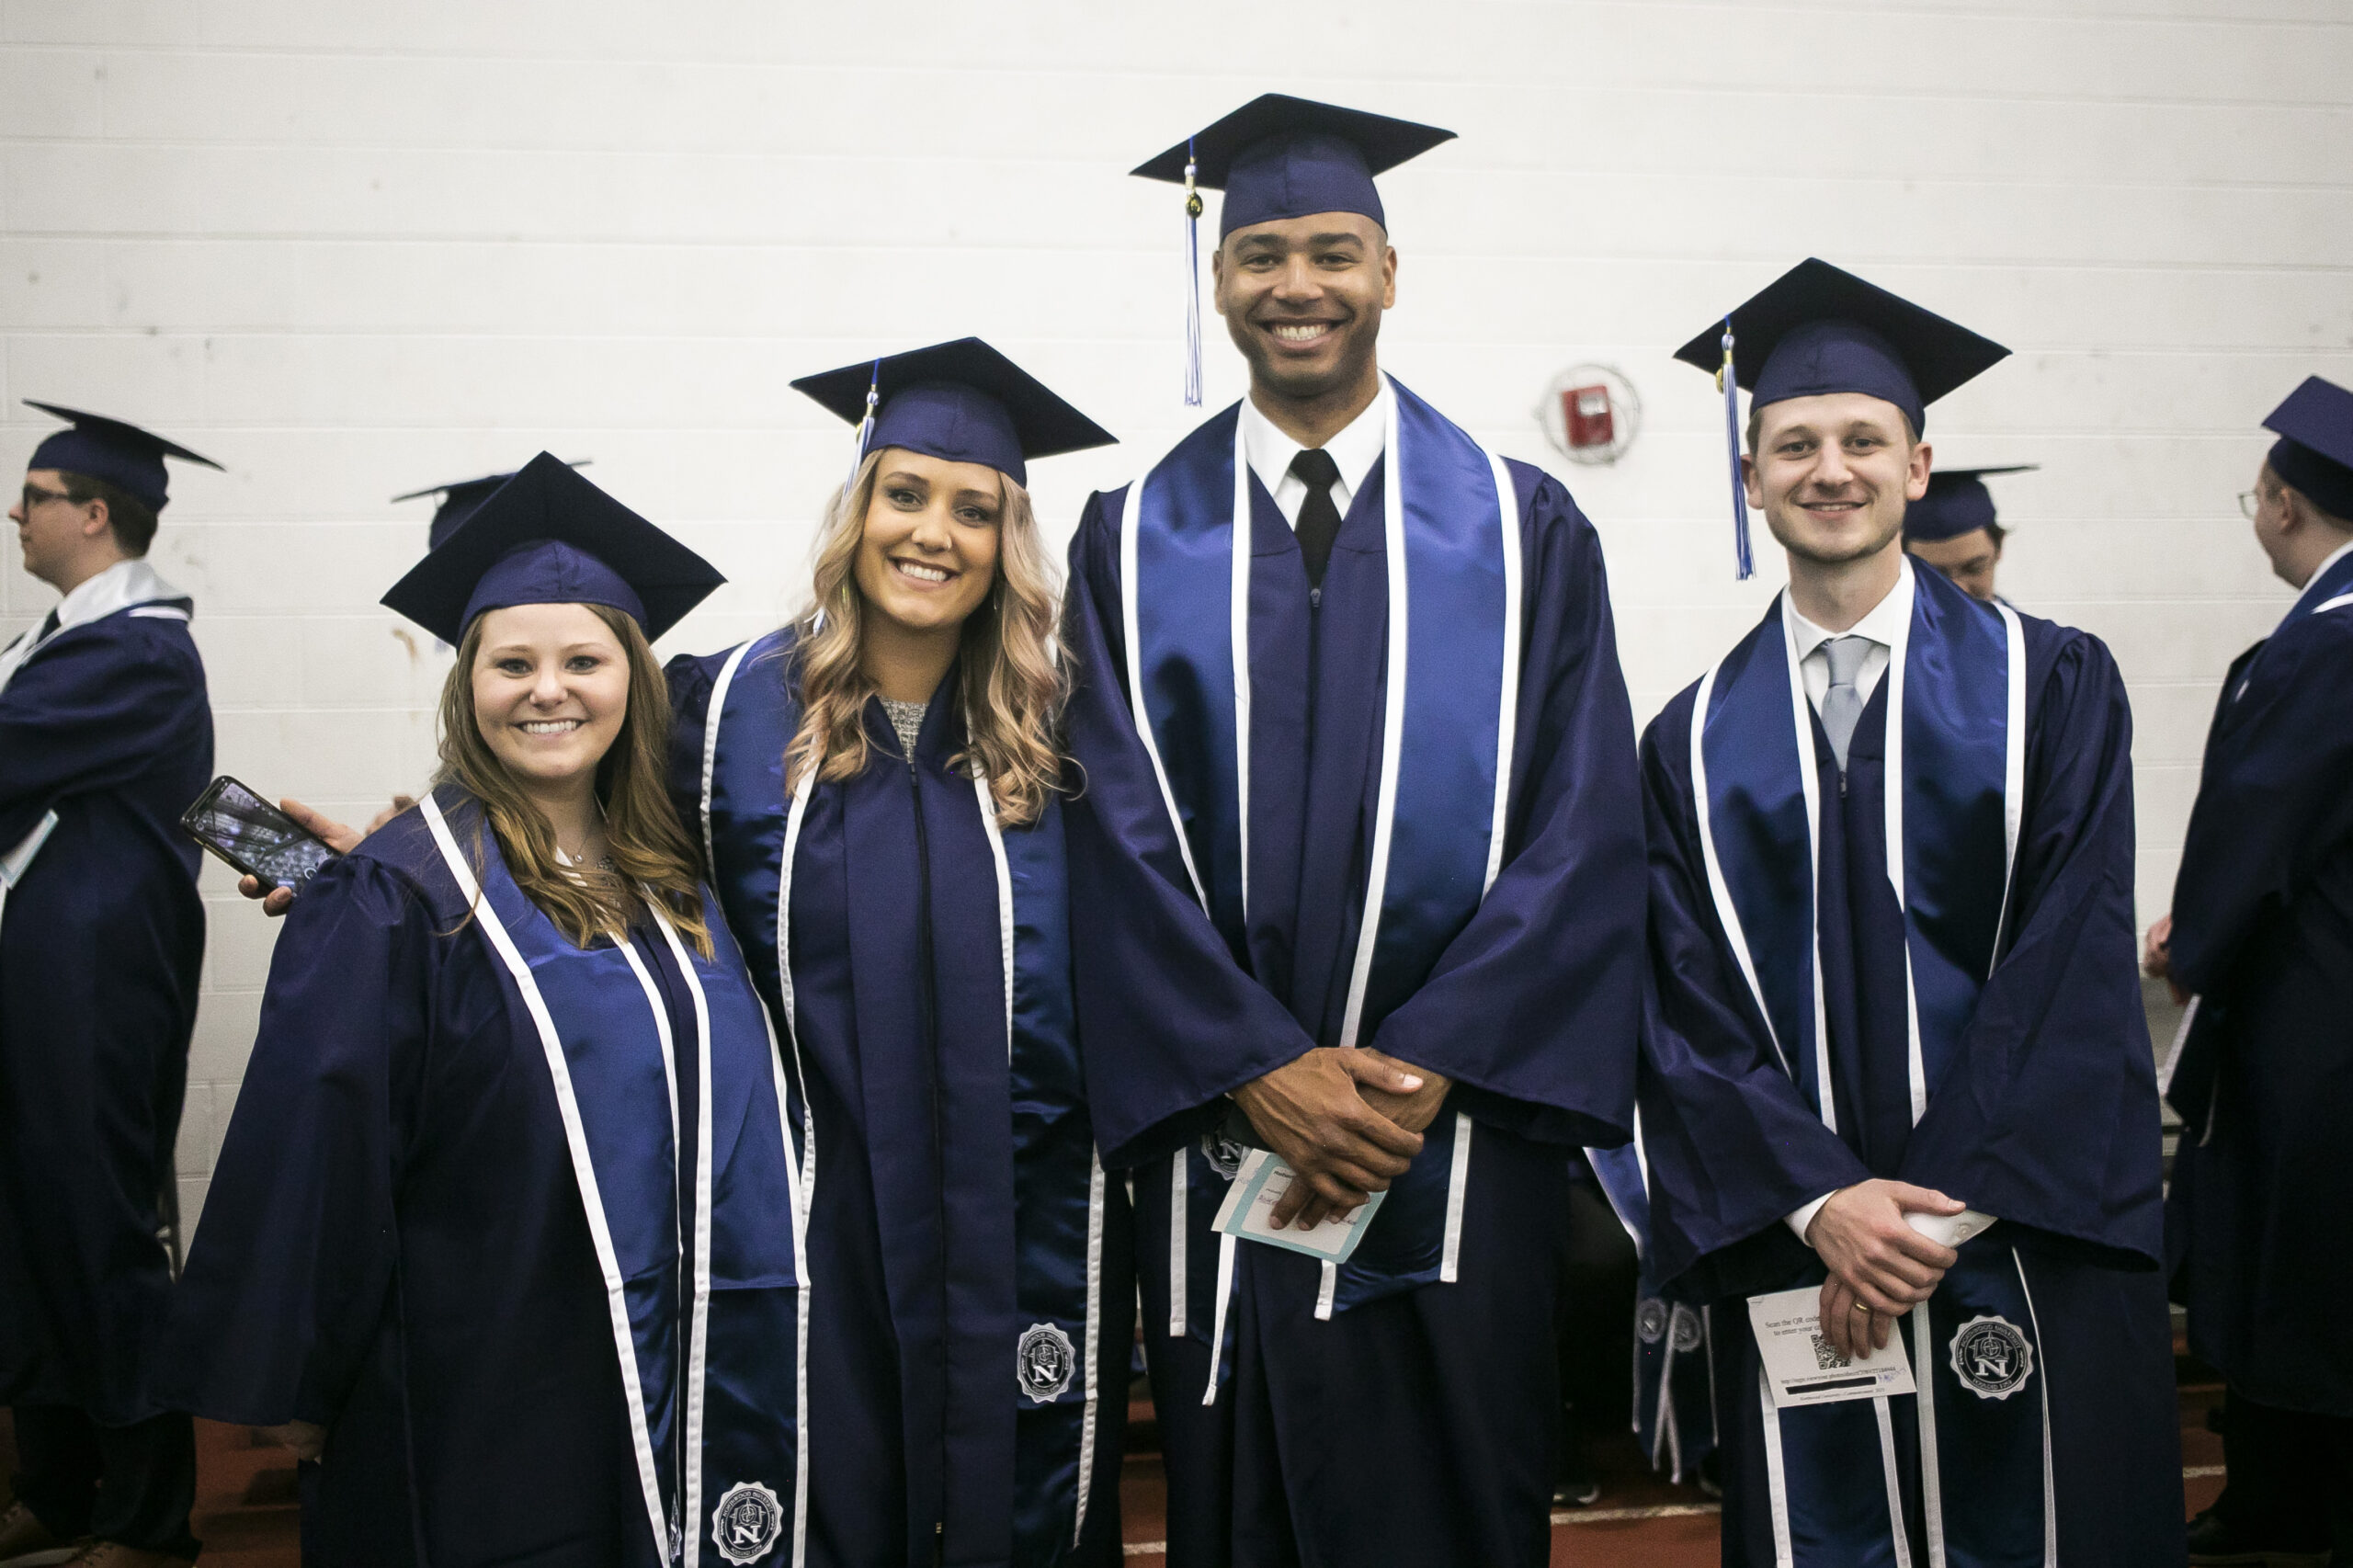 Northwood students at the graduation ceremony